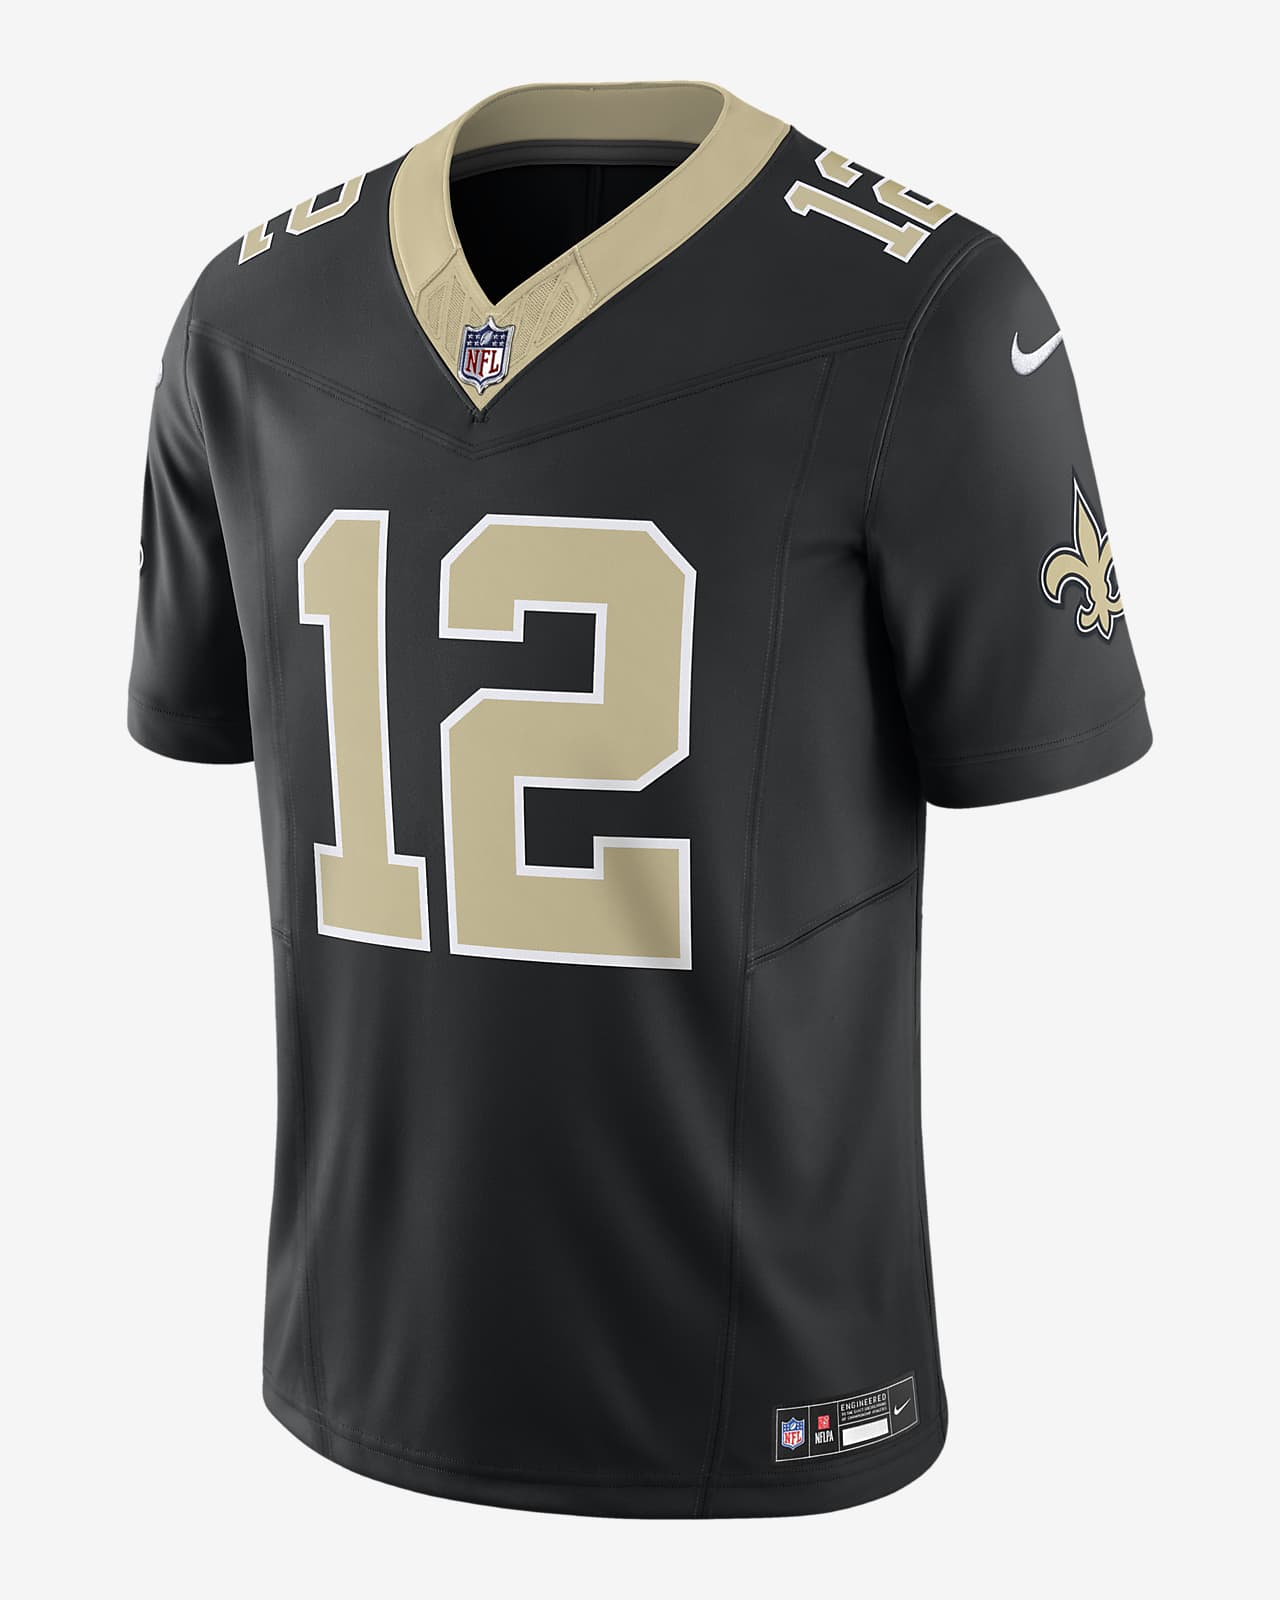 Chris Olave New Orleans Saints Men's Nike Dri-FIT NFL Limited Football Jersey